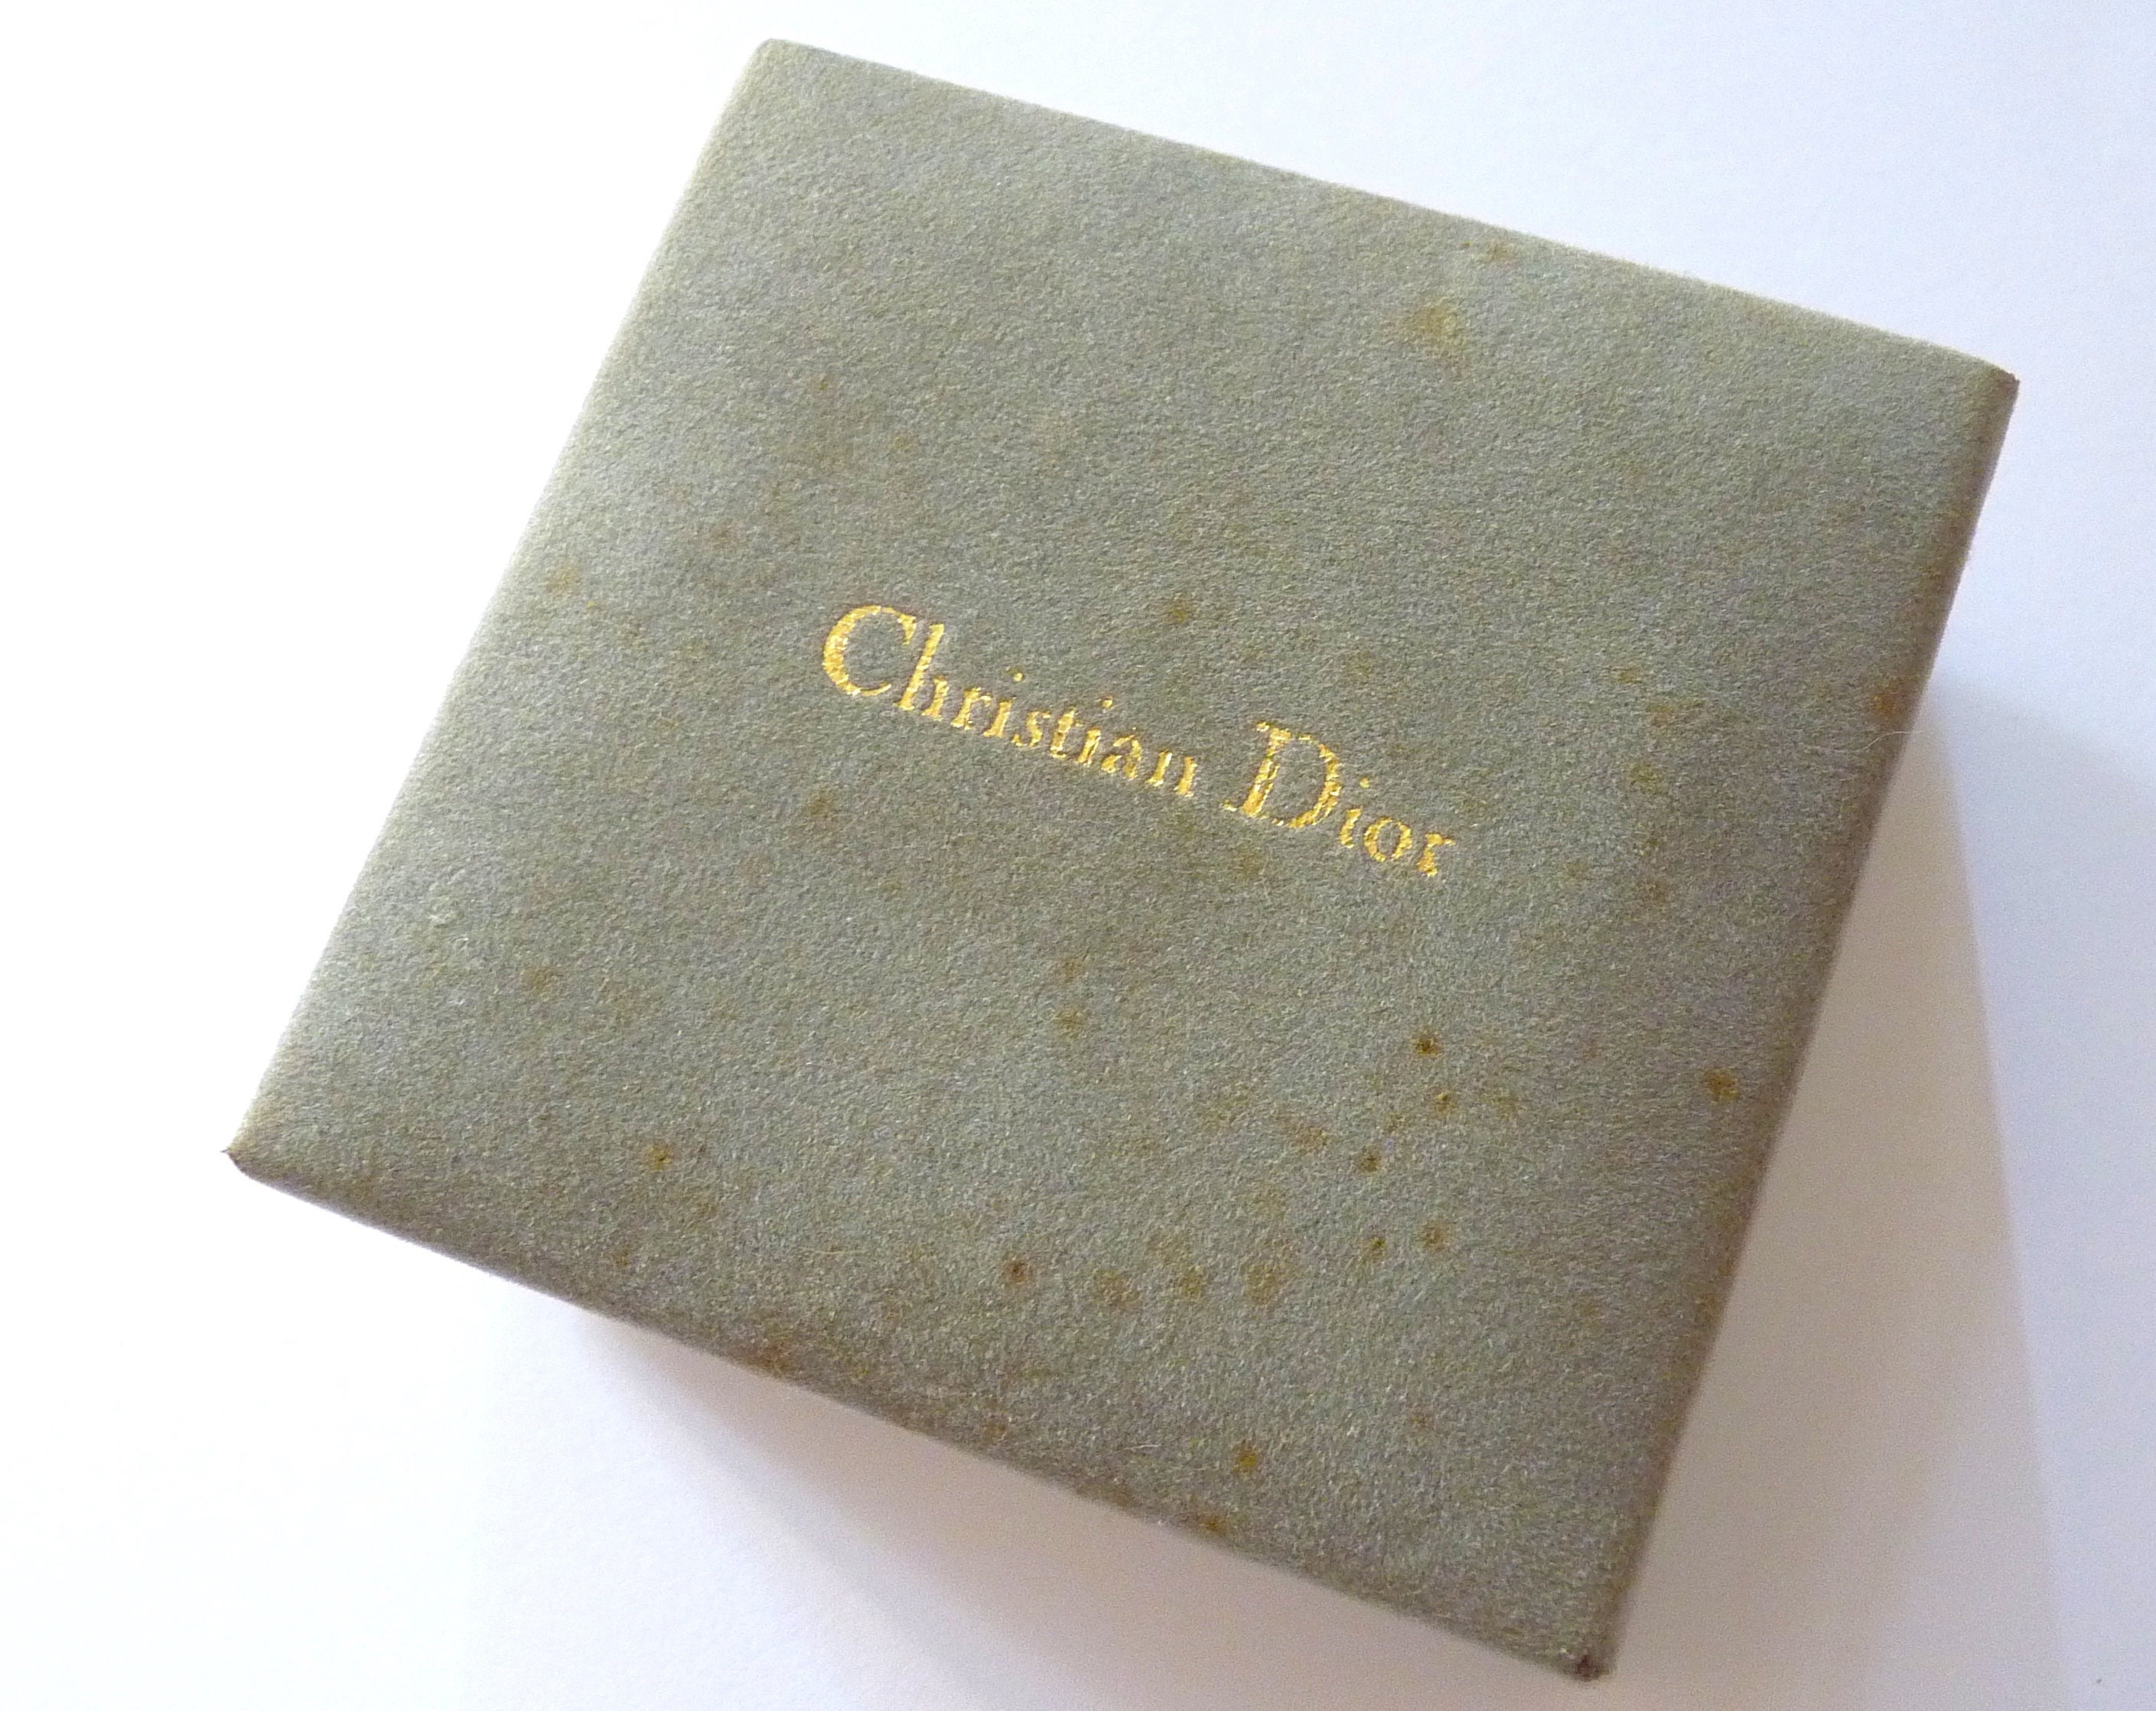 Vintage DIOR Cufflinks and Tie Clip With Original Box 1960s -  Denmark